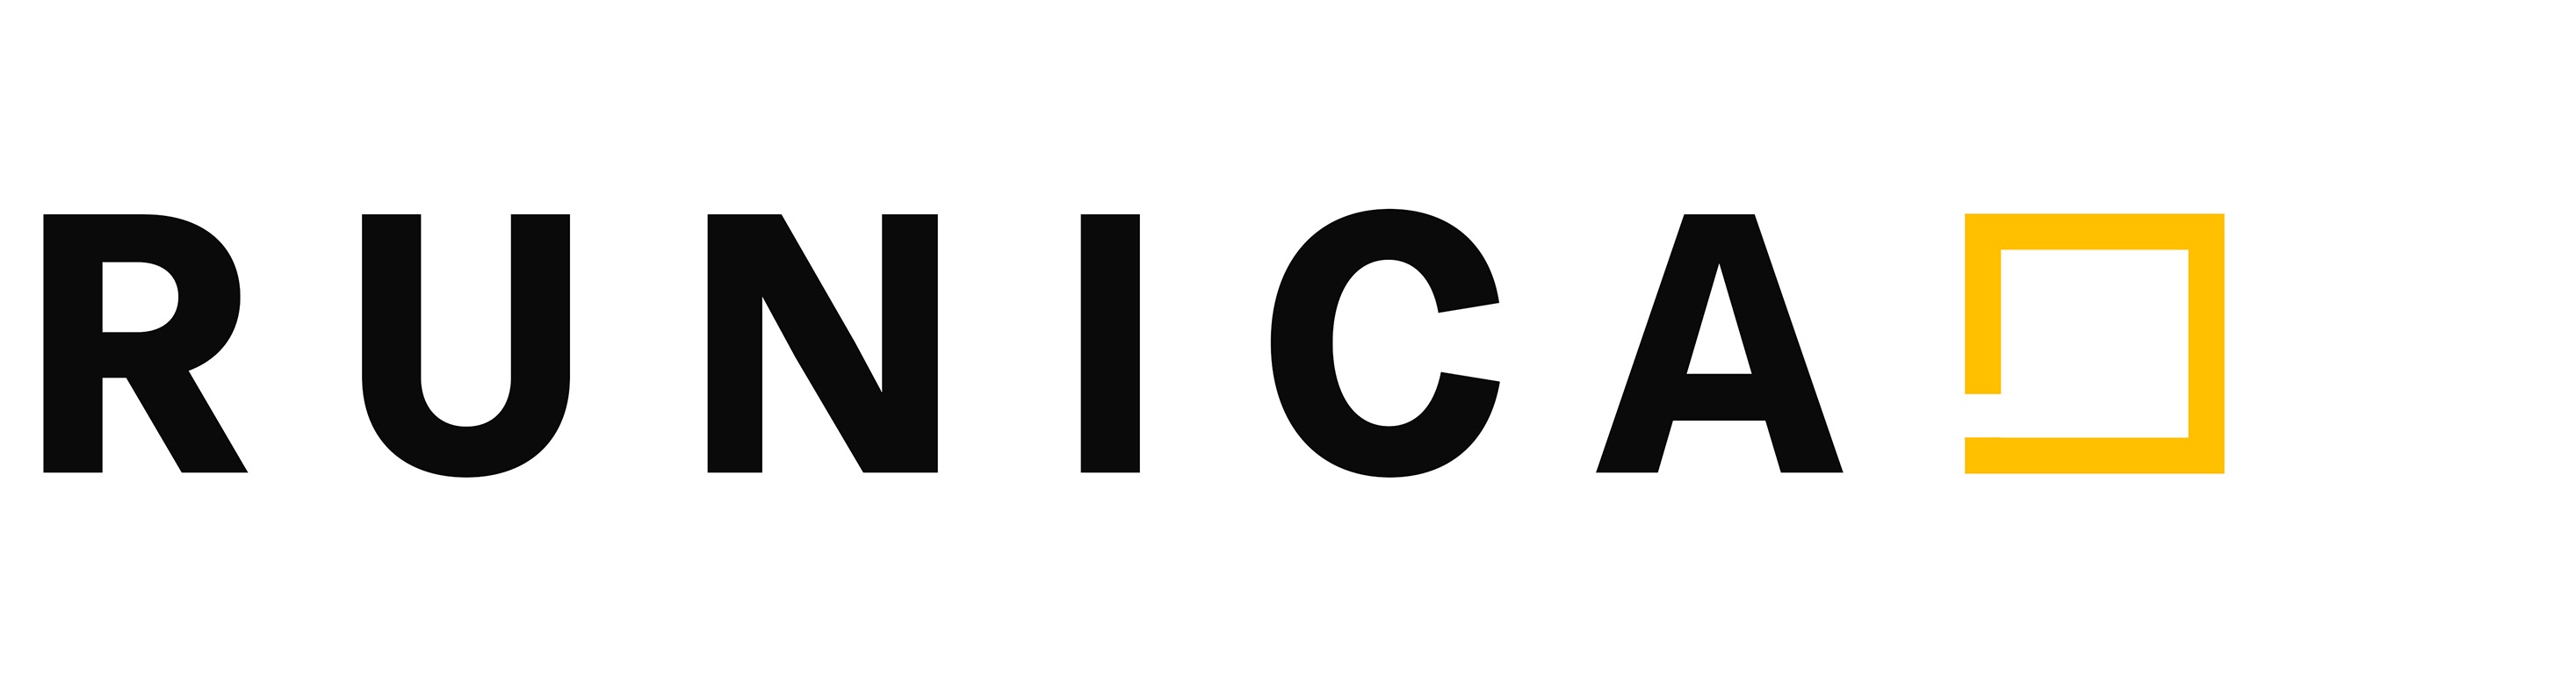 runica_logo